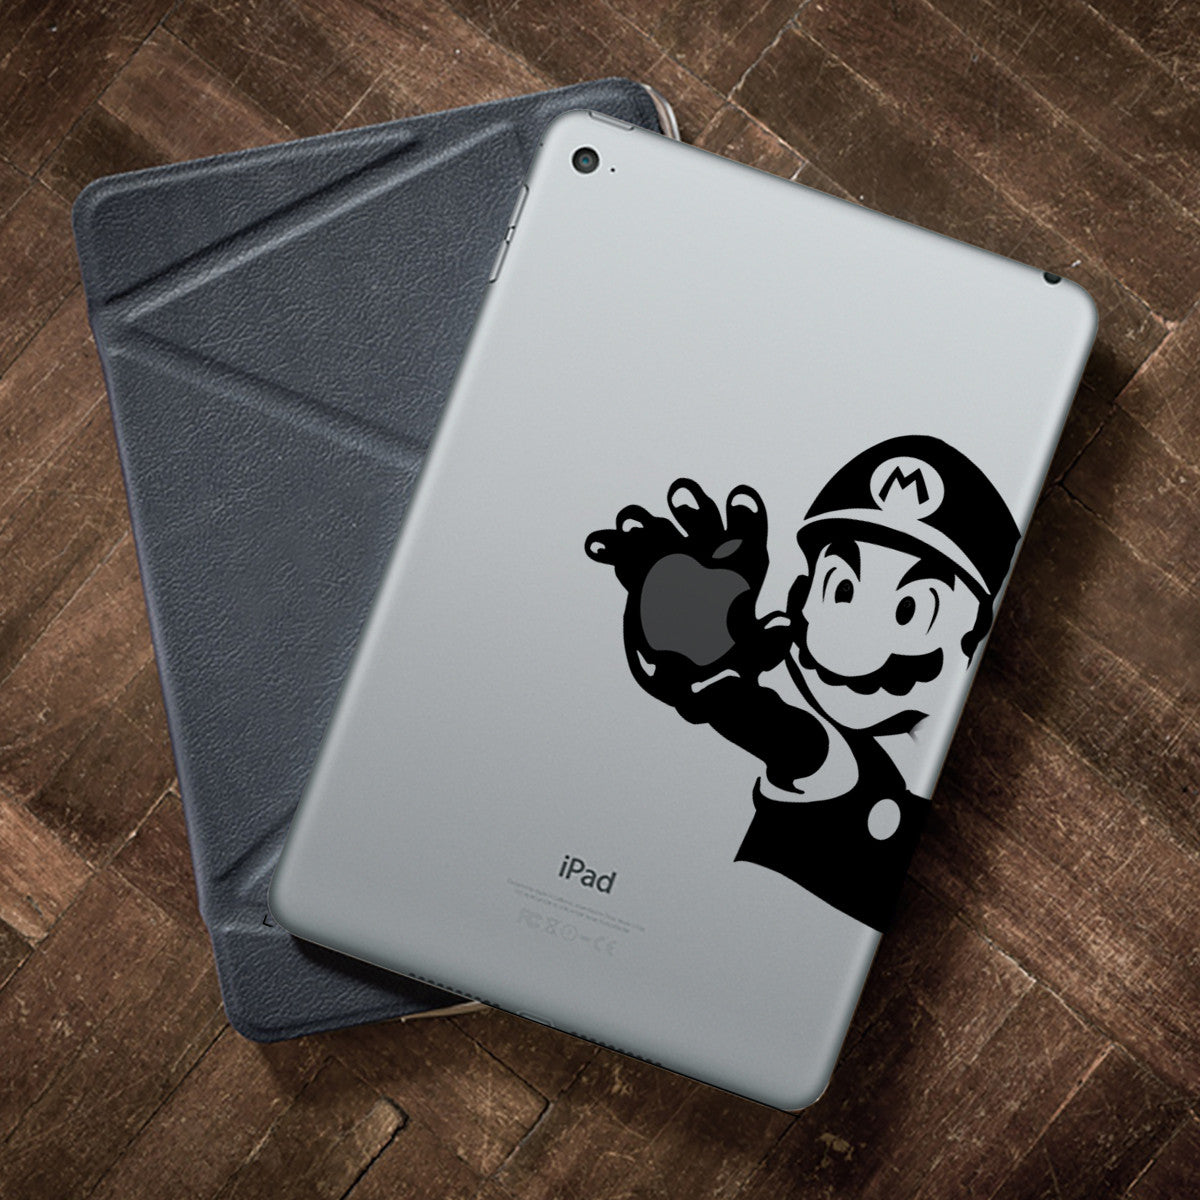 Super Mario iPad Decal